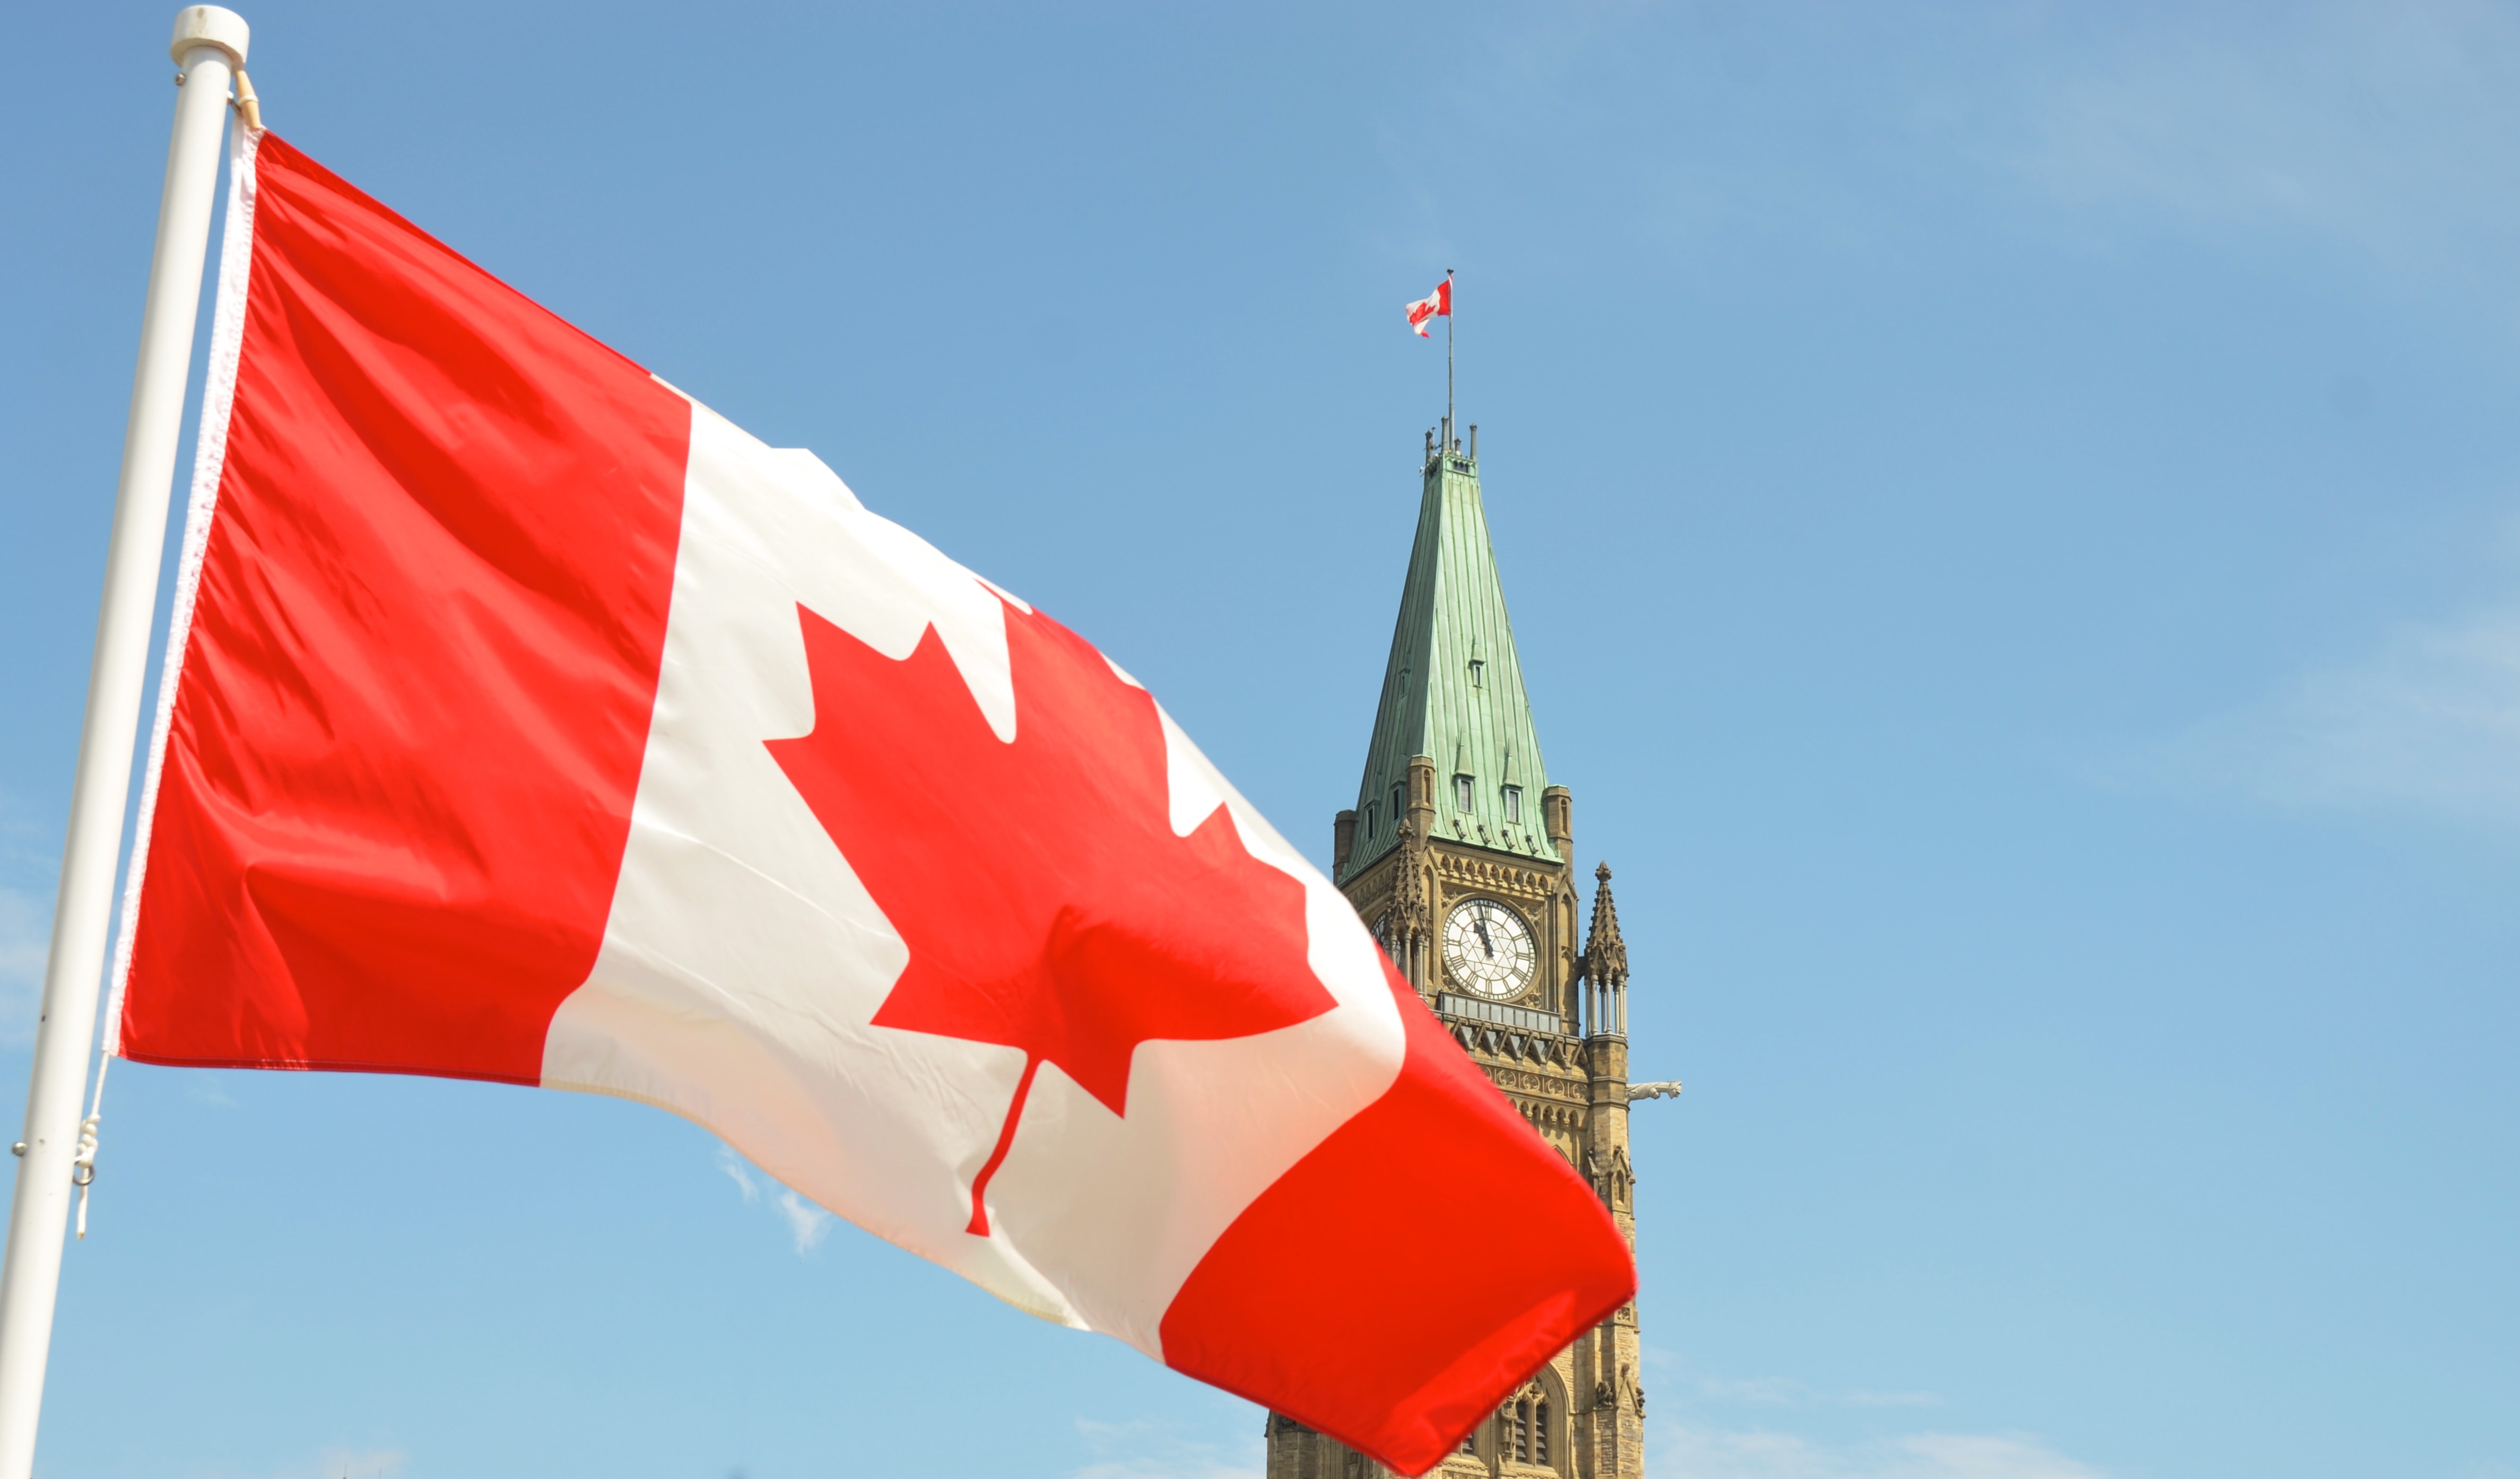 Canadian Flag with Parliament Hill Ottawa | Jason Hafso on Unsplash